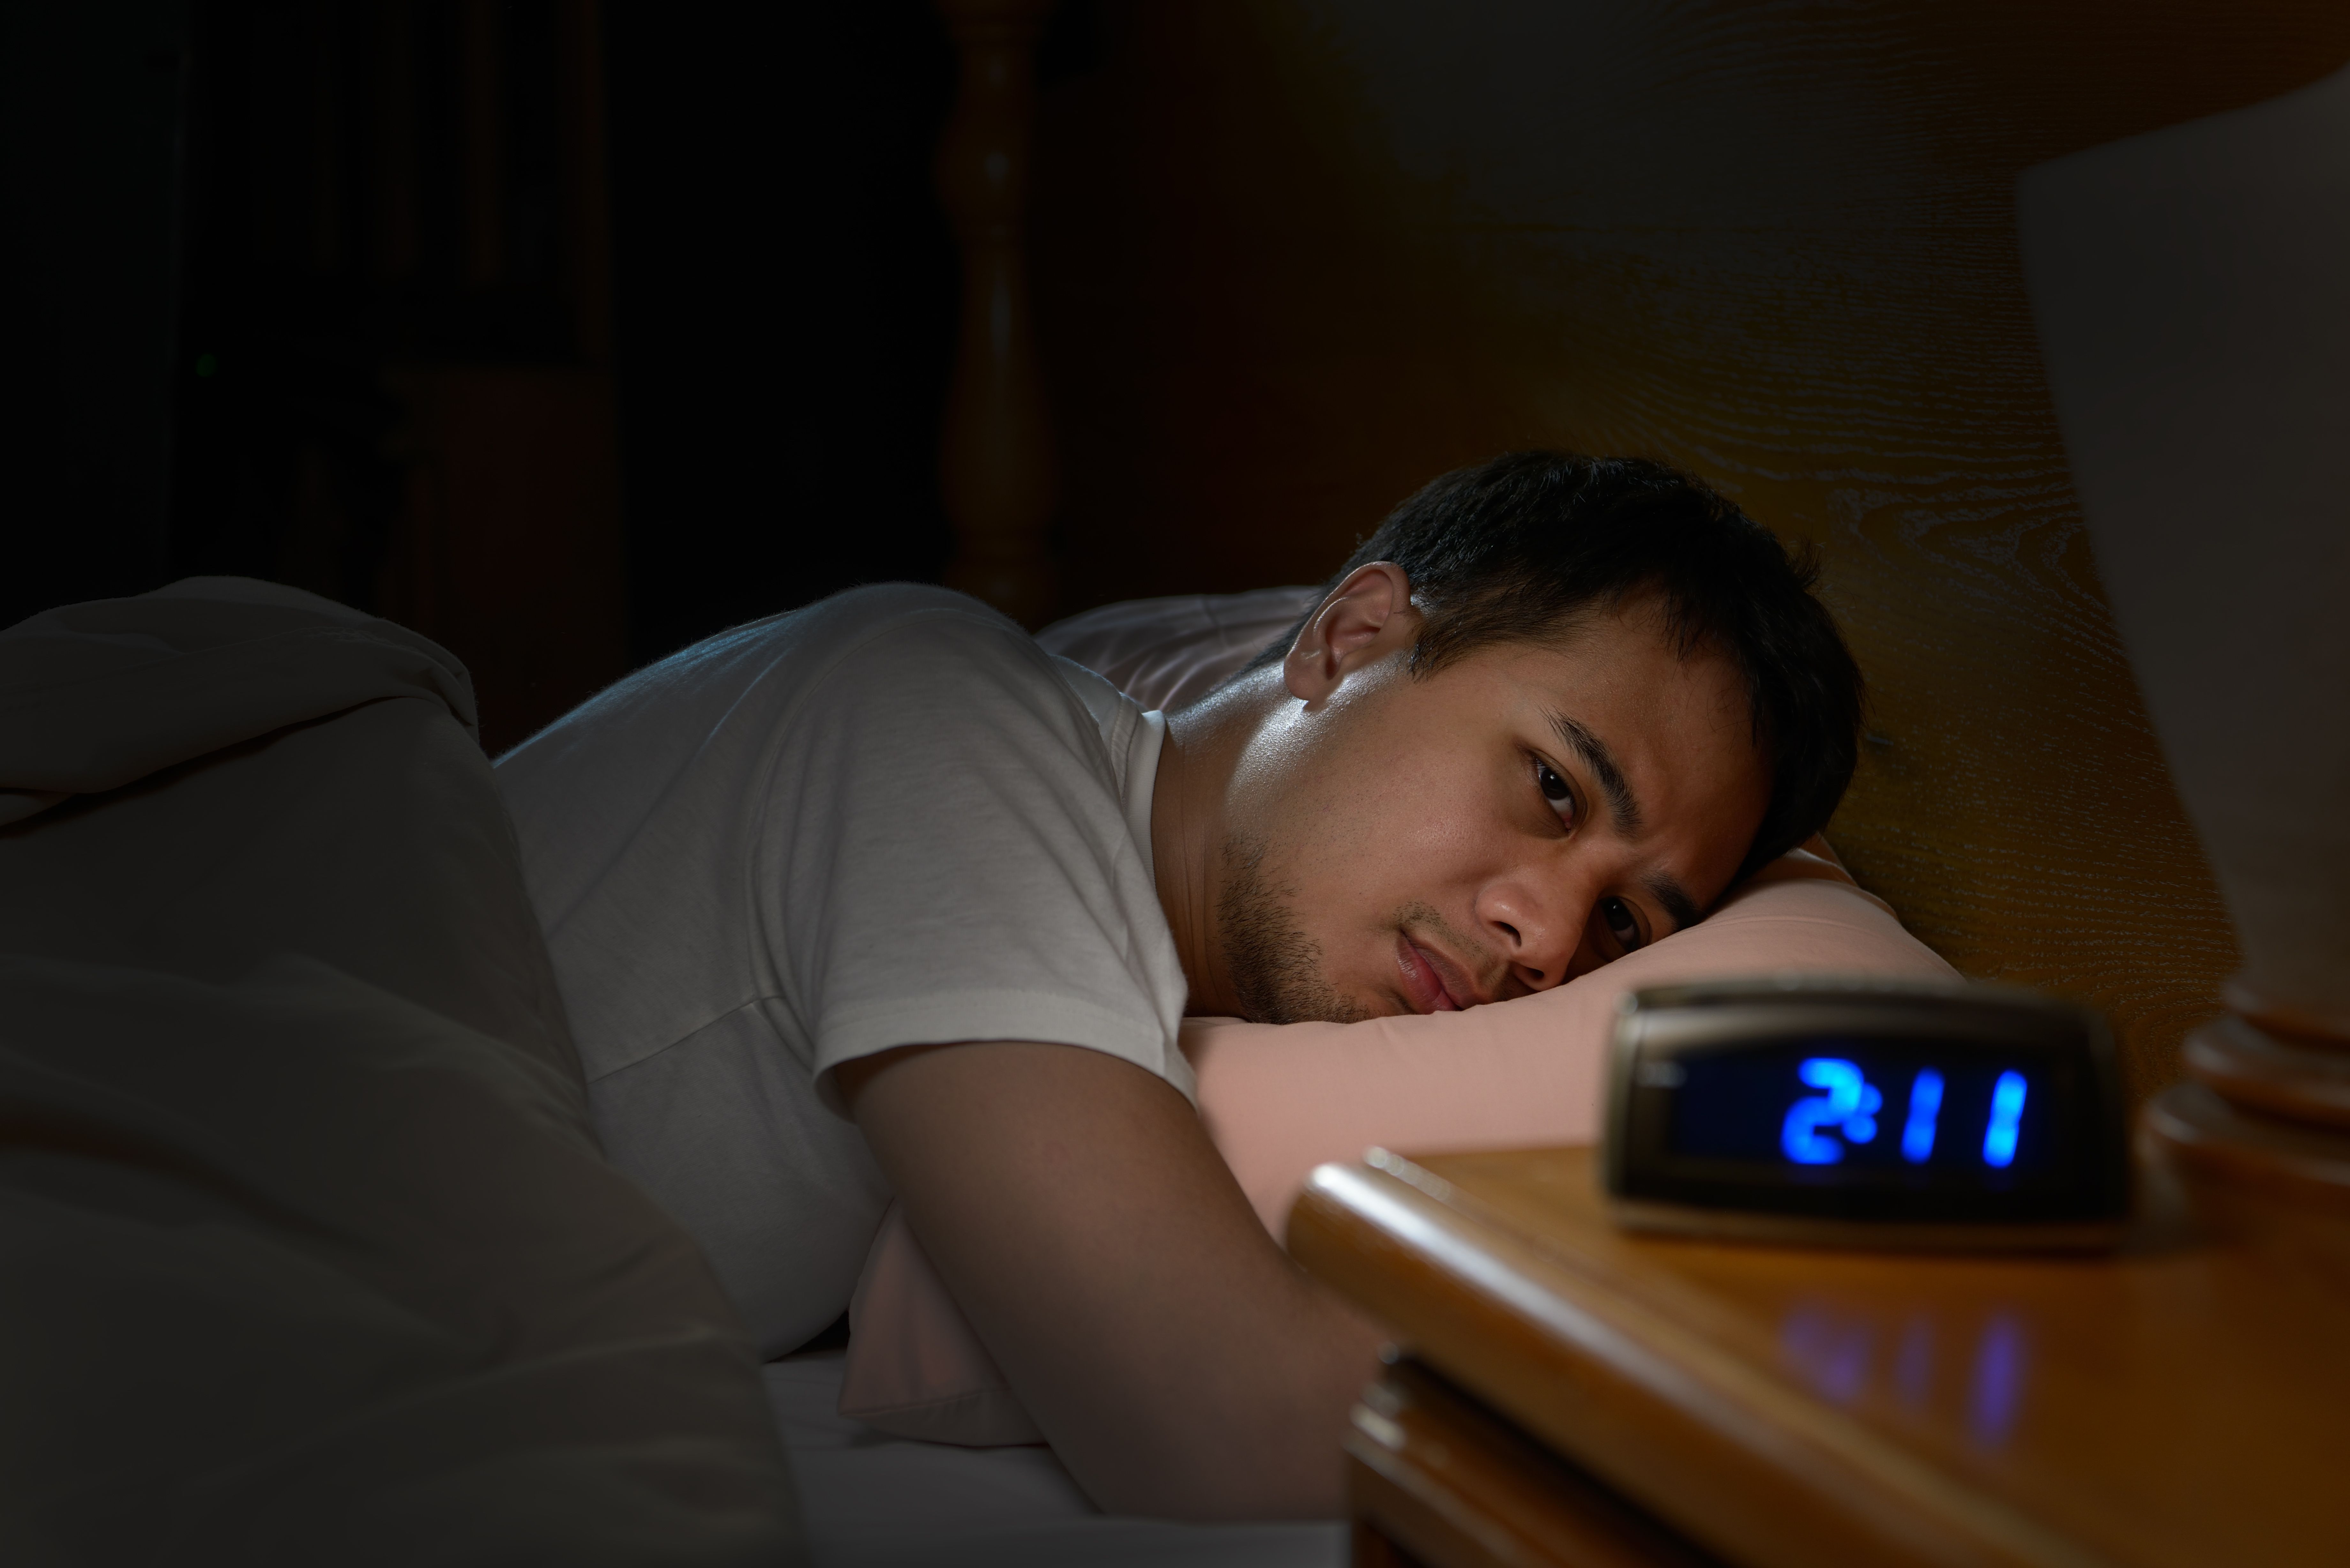 Man Enduring Insomnia | image credit: amenic181 - stock.adobe.com